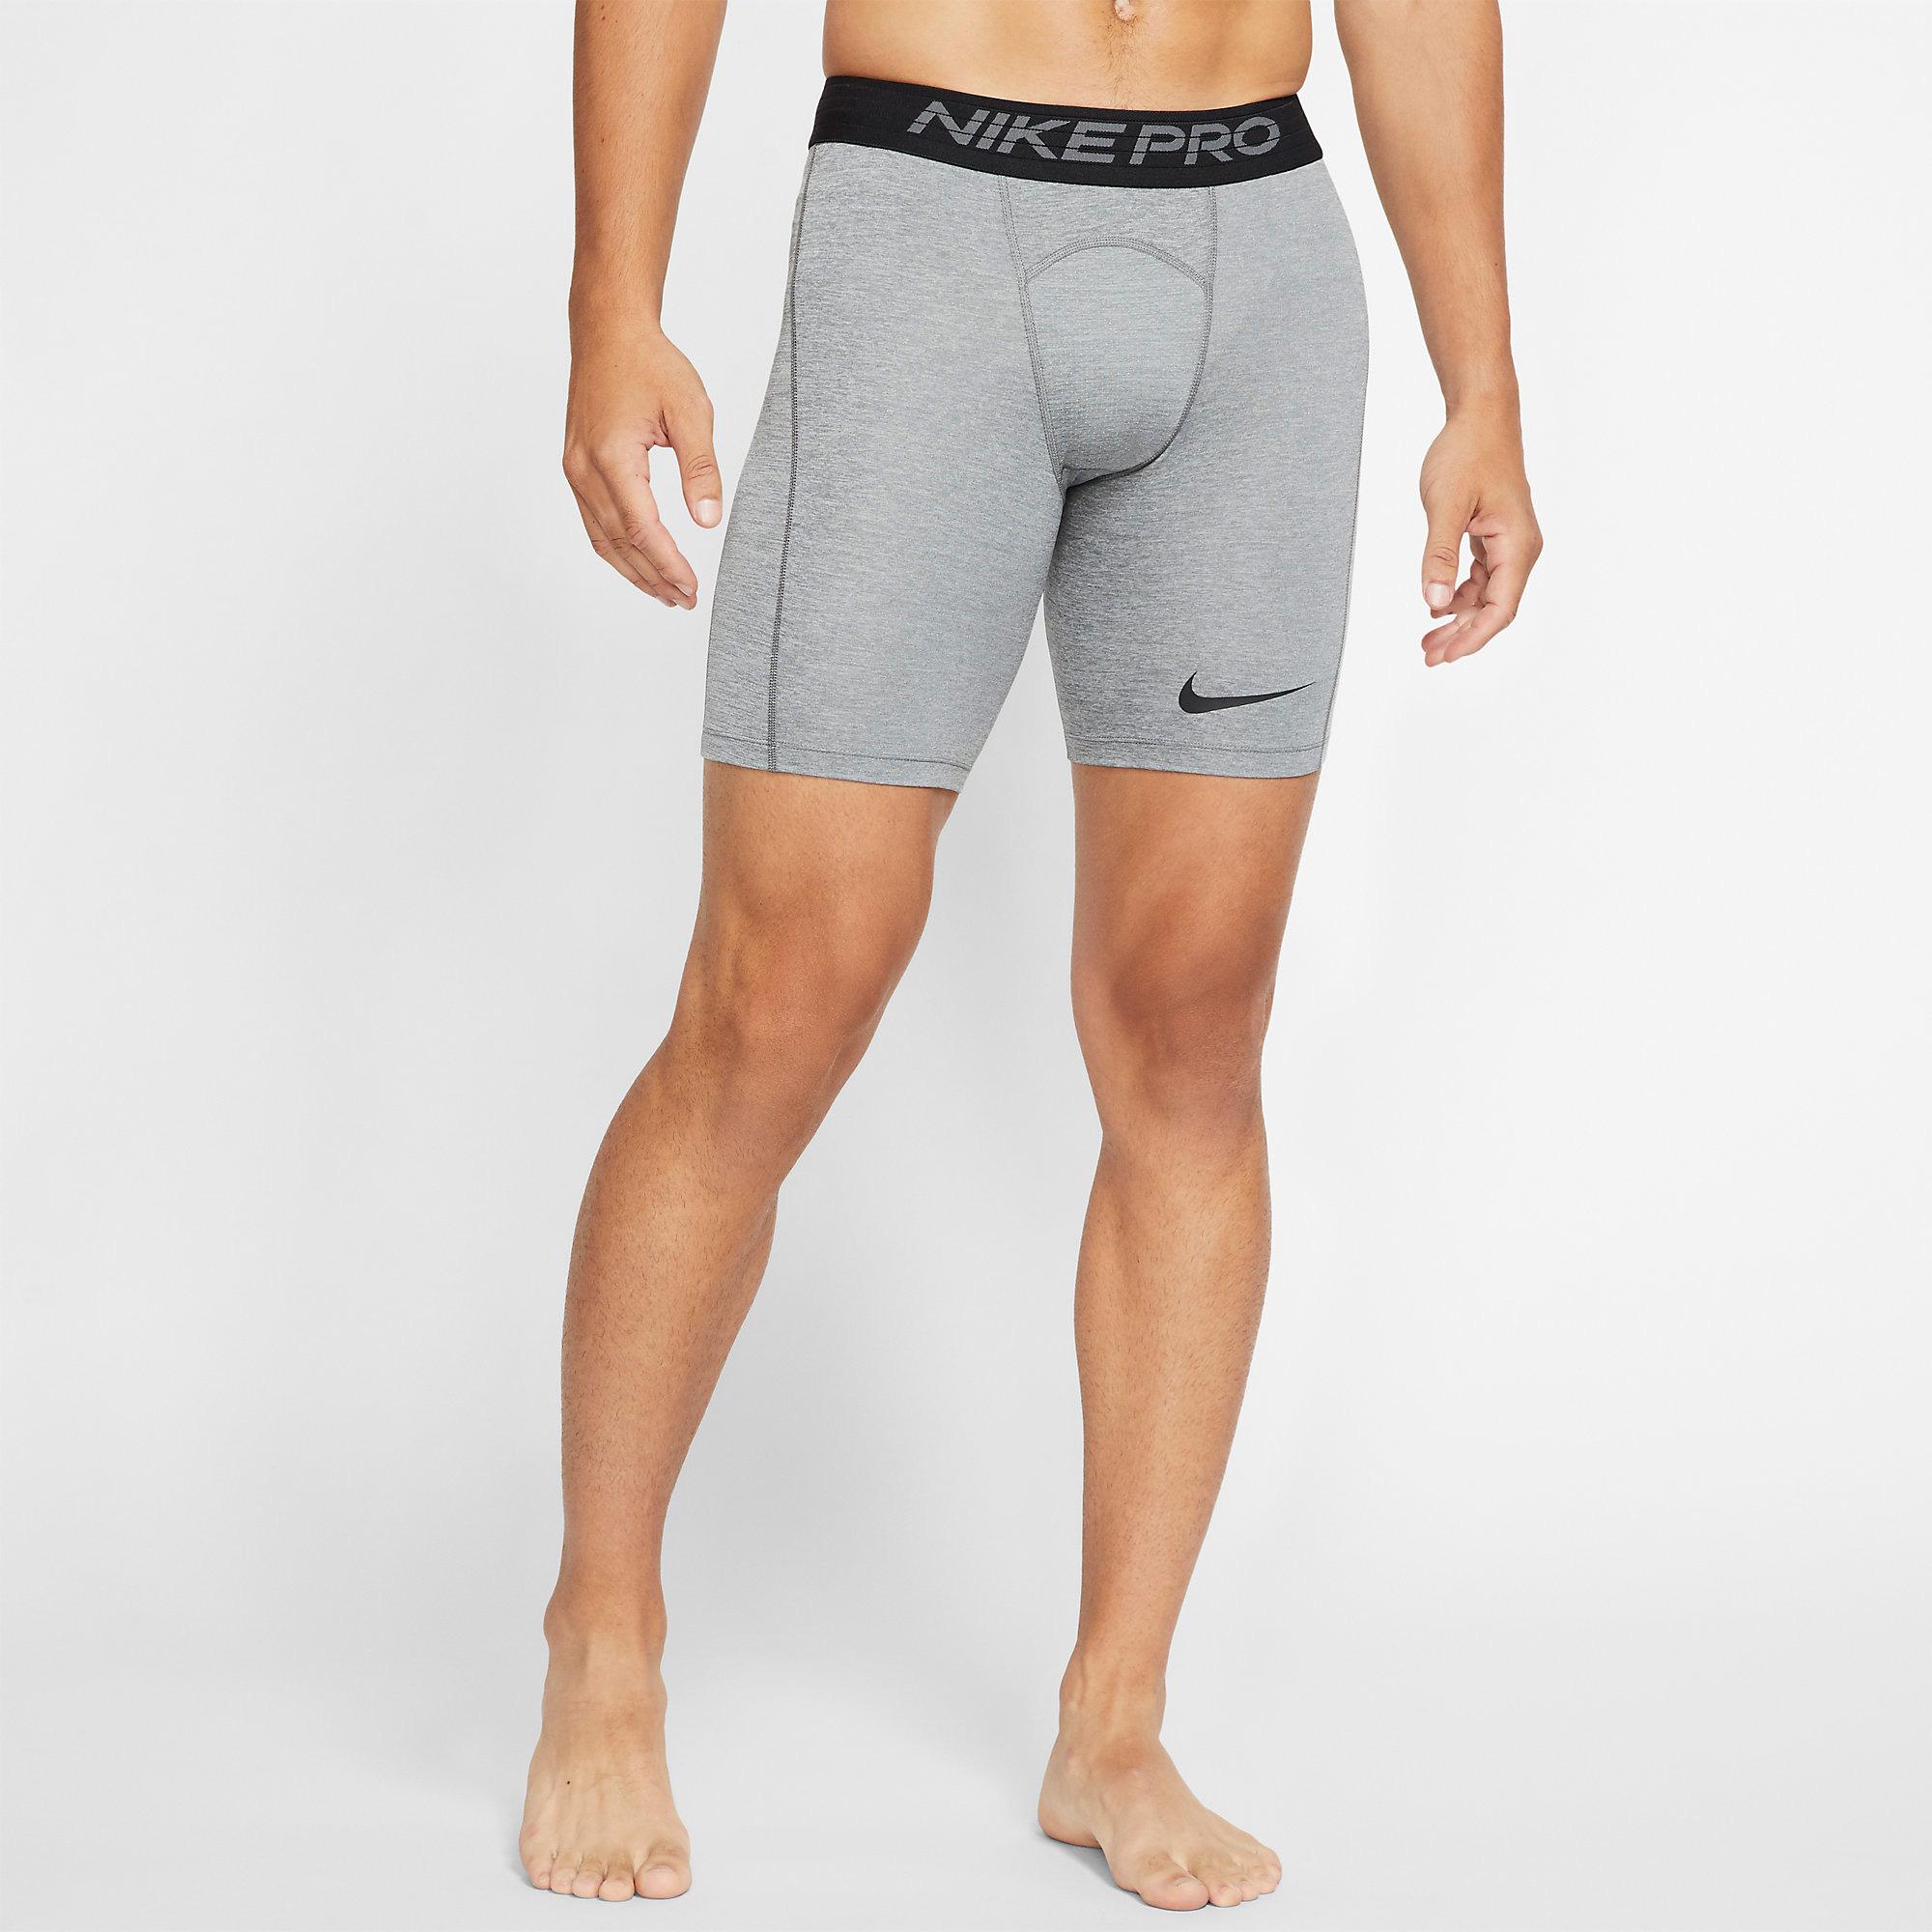 Nike Mens Pro Shorts - Smoke Grey - Tennisnuts.com